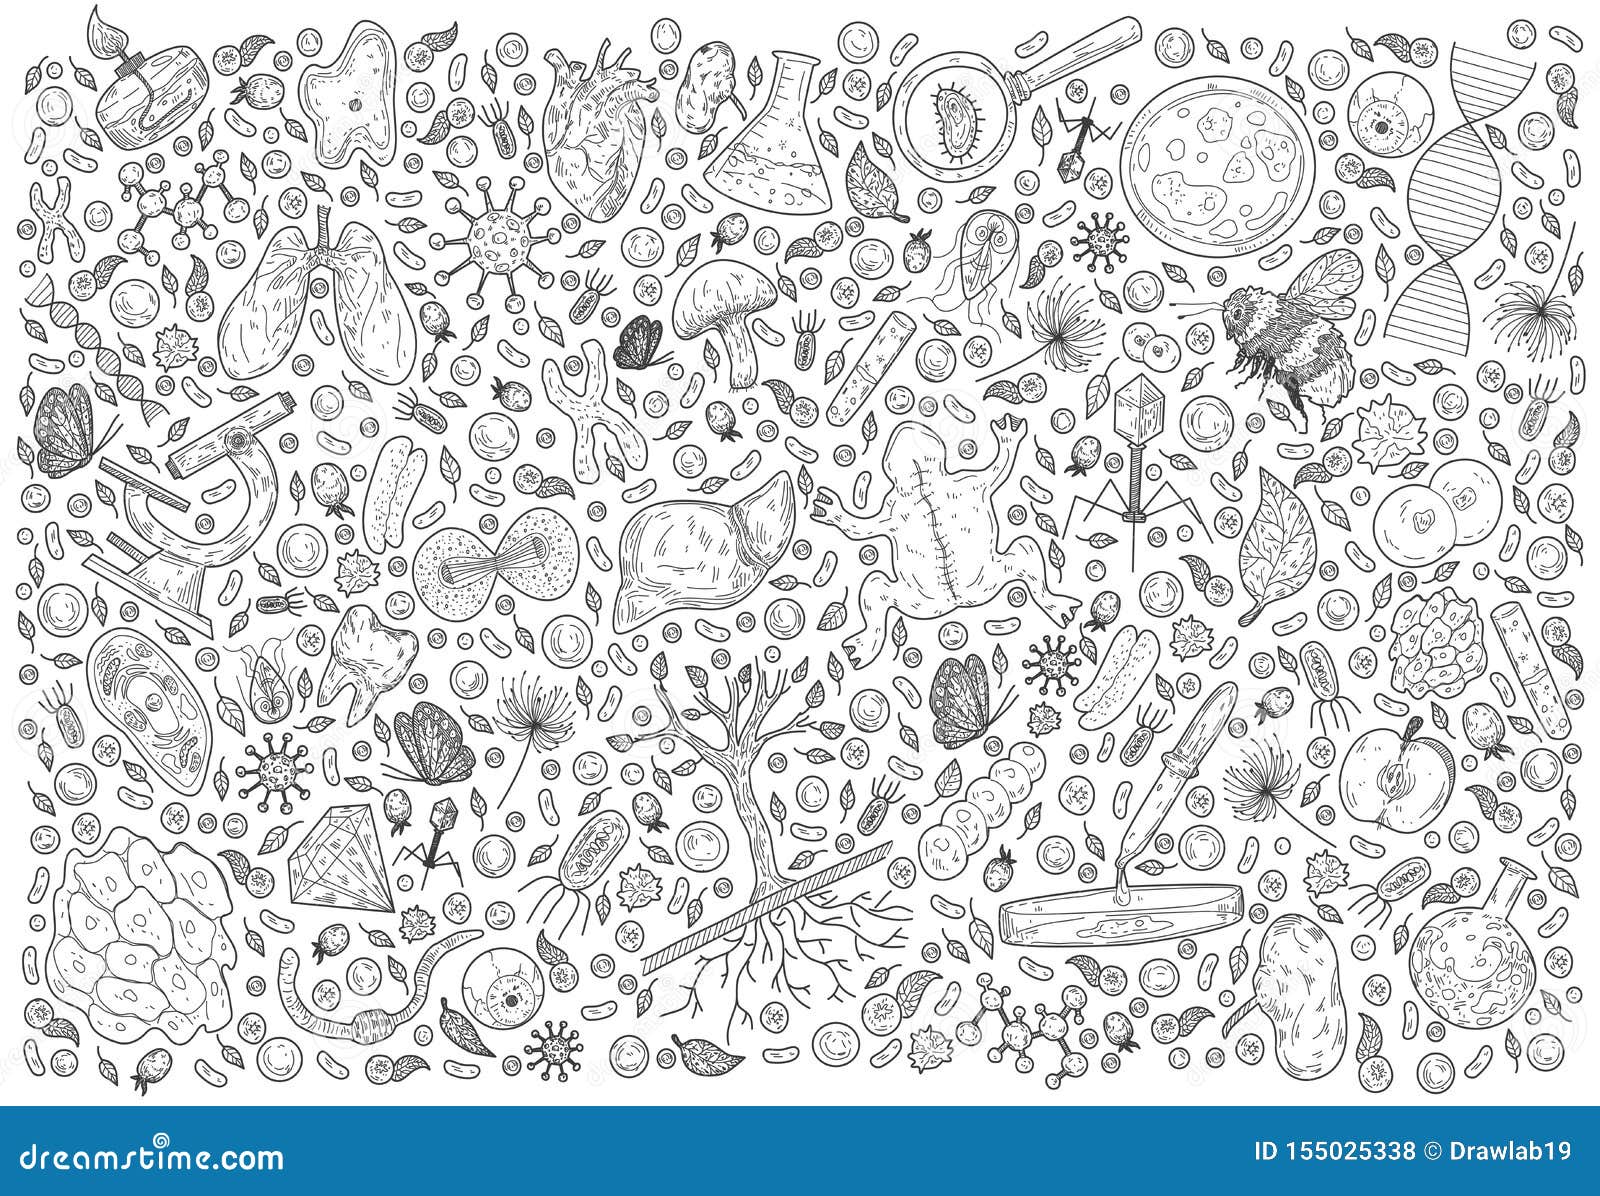 doodle science   . biology and biotechnology set. hand on the theme of zoology, botany, anatomy on